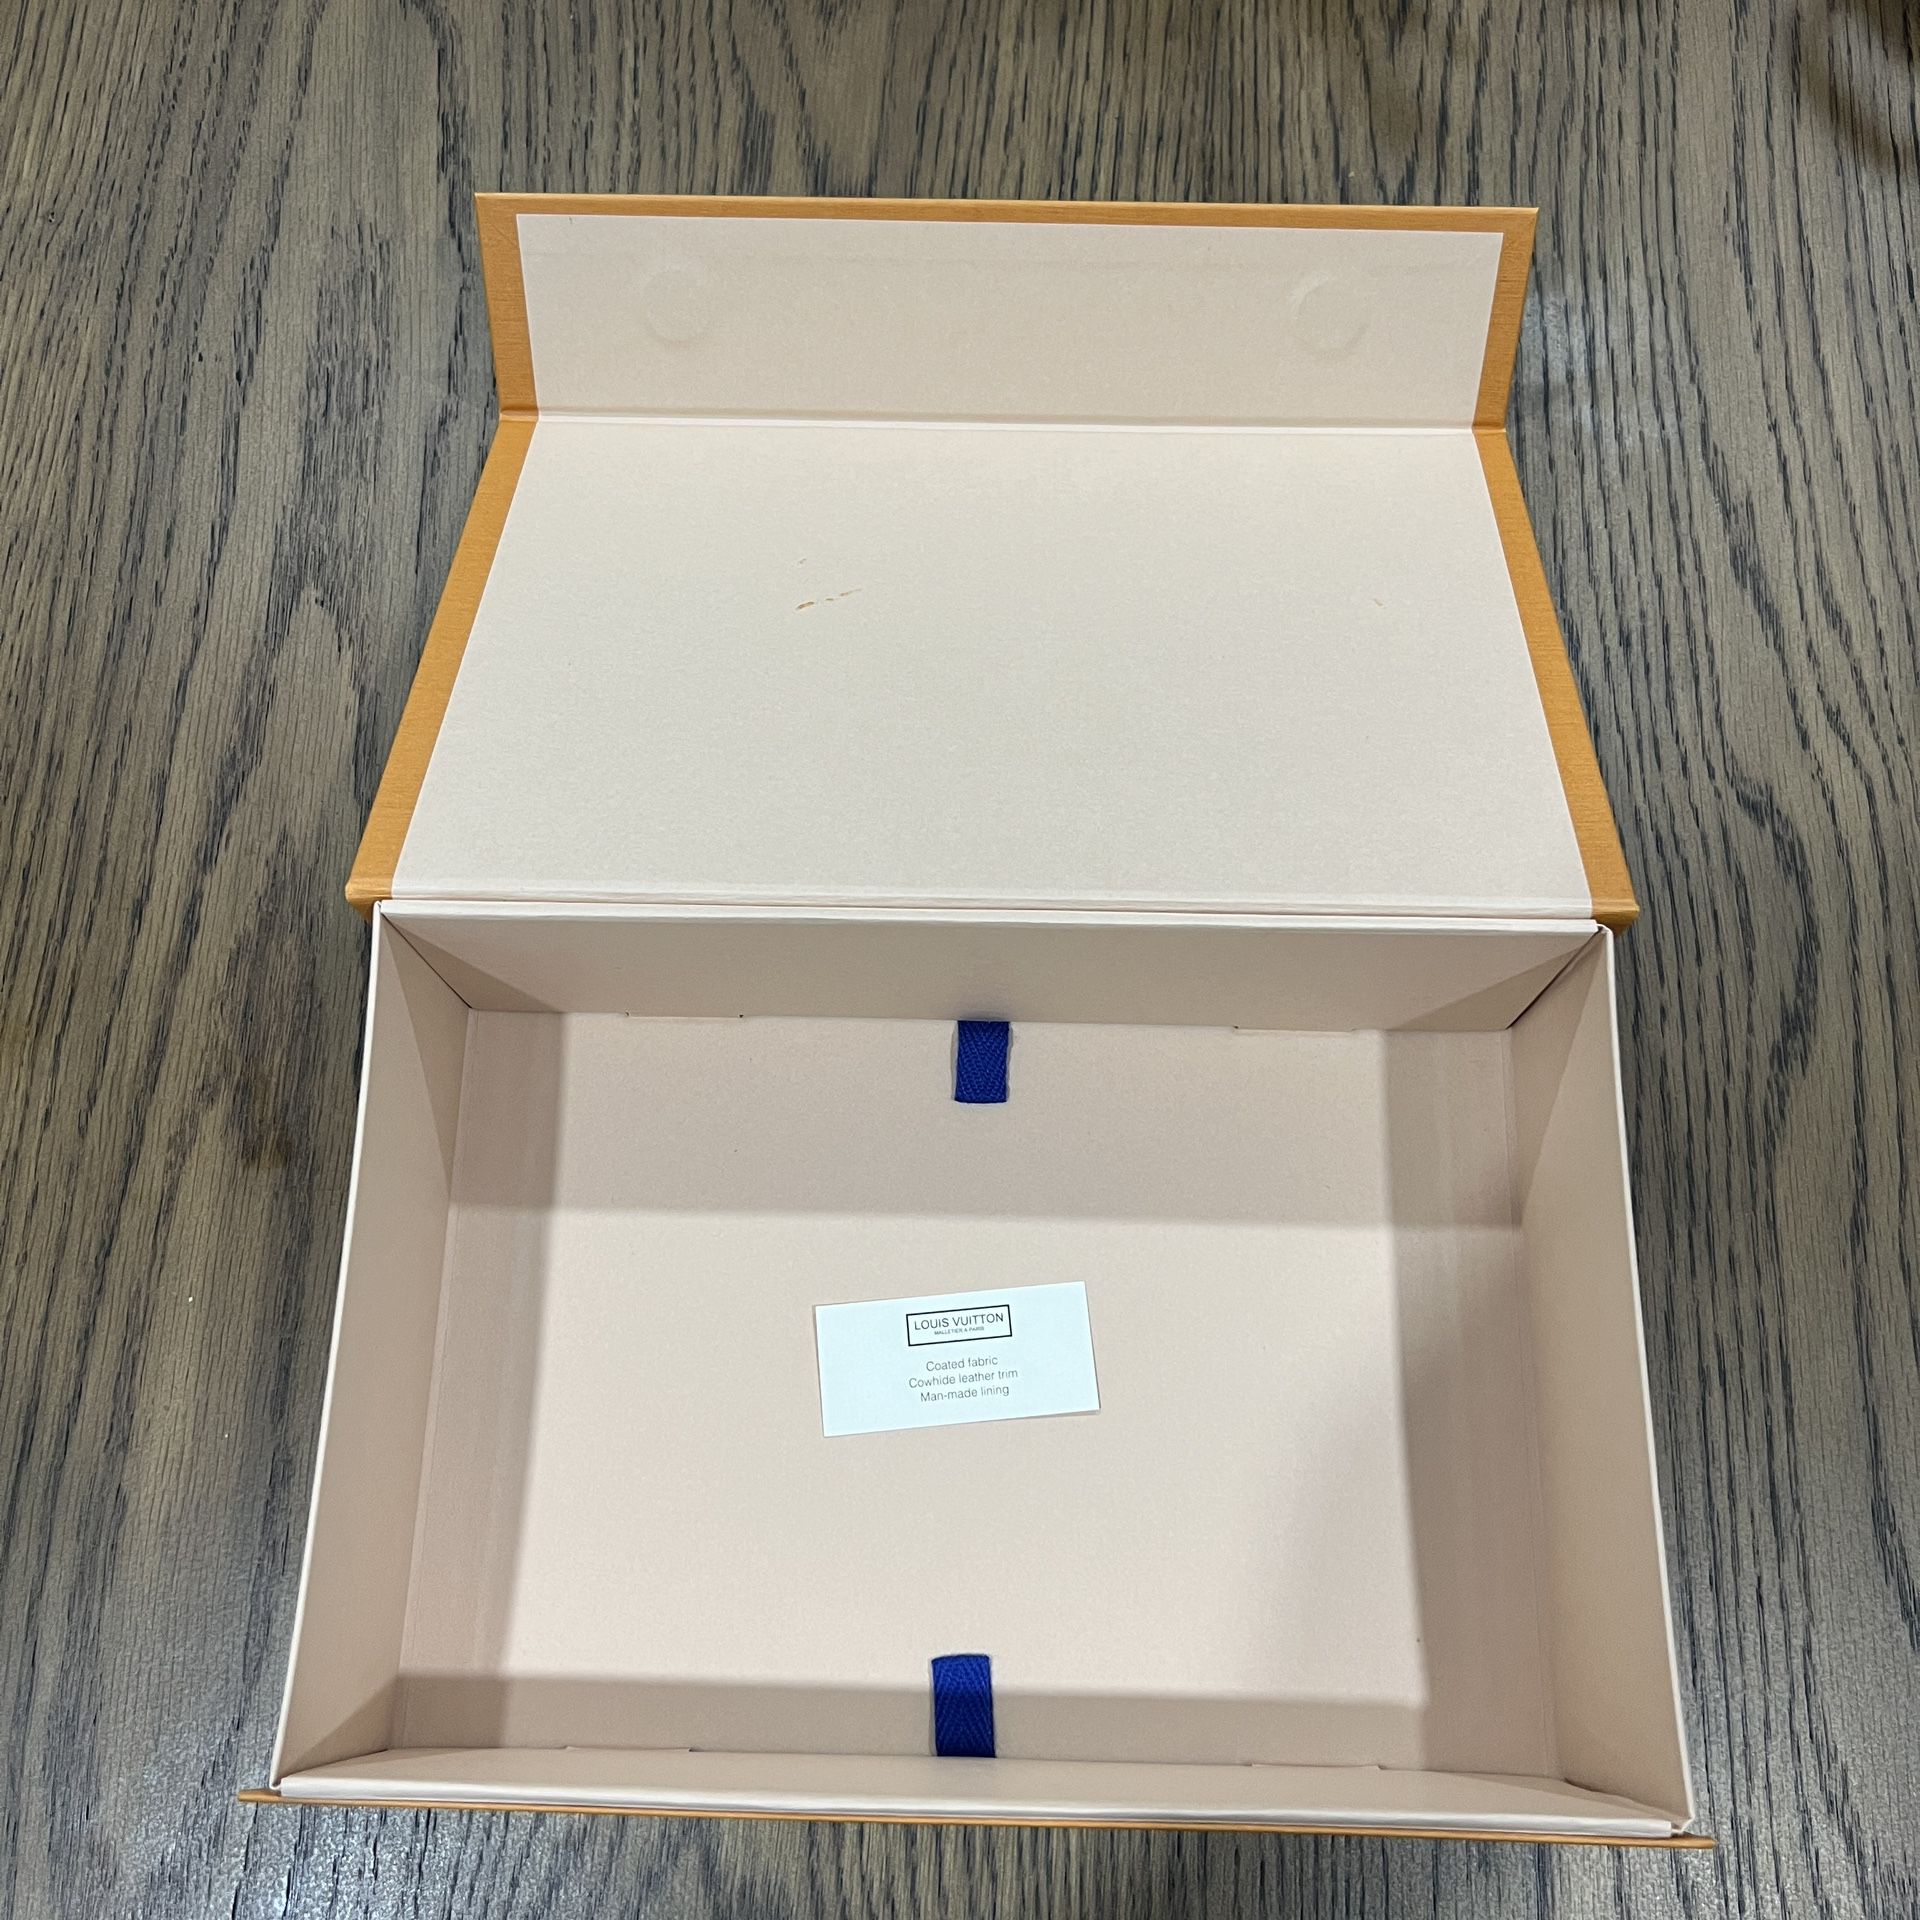 Louis Vuitton Box Set for Sale in Whittier, CA - OfferUp